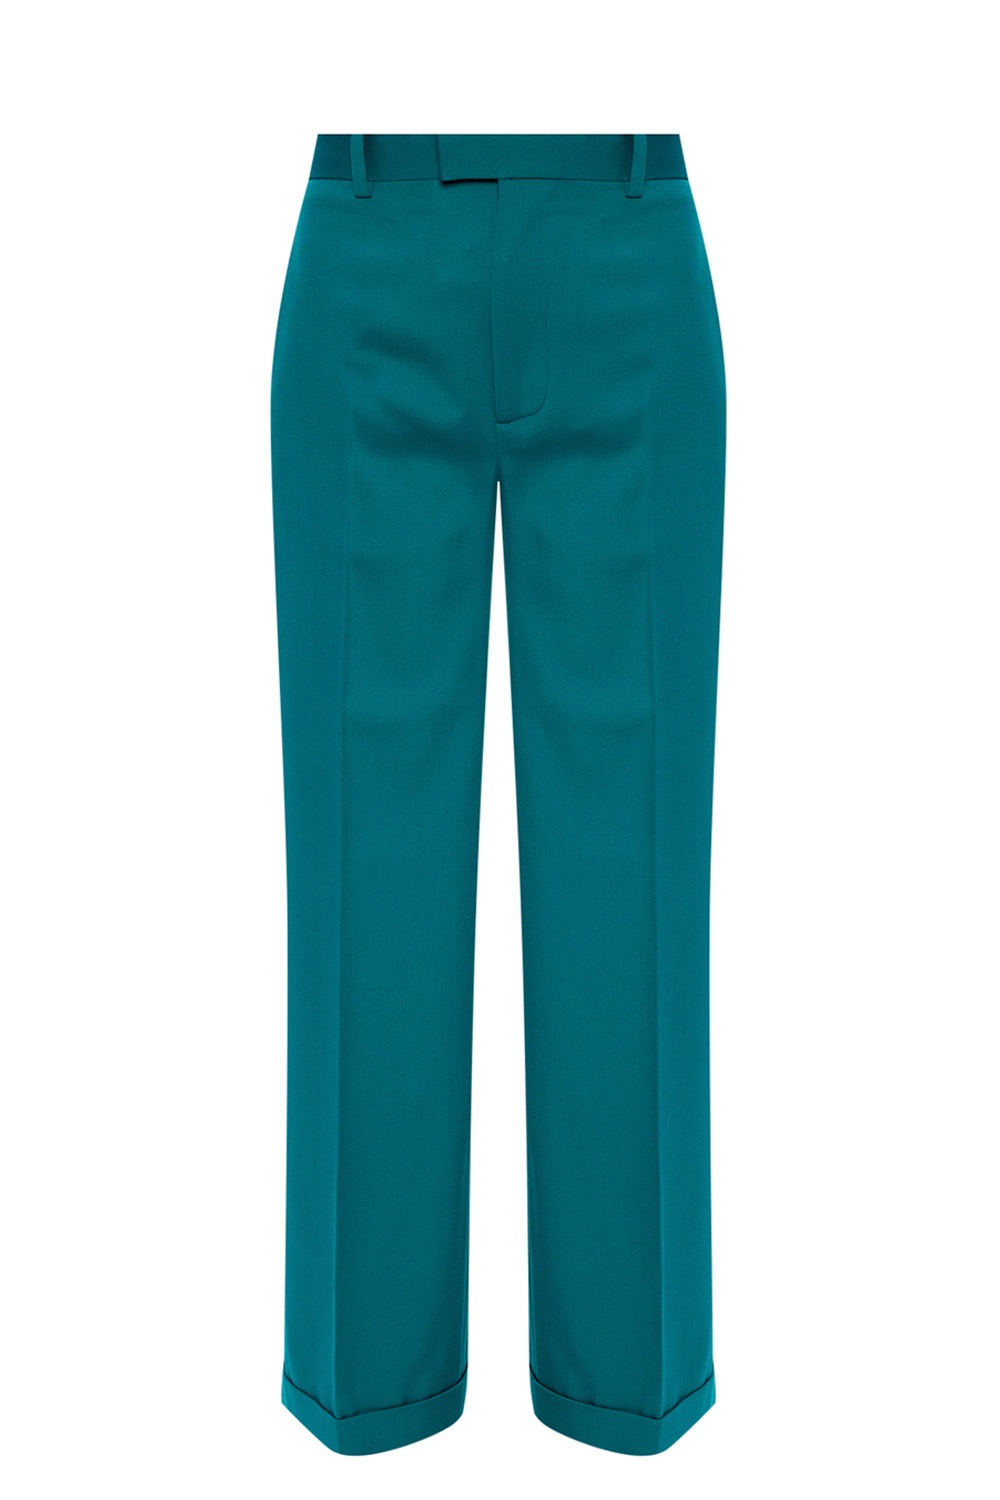 Mango activewear seamless leggings co-ord in light blue